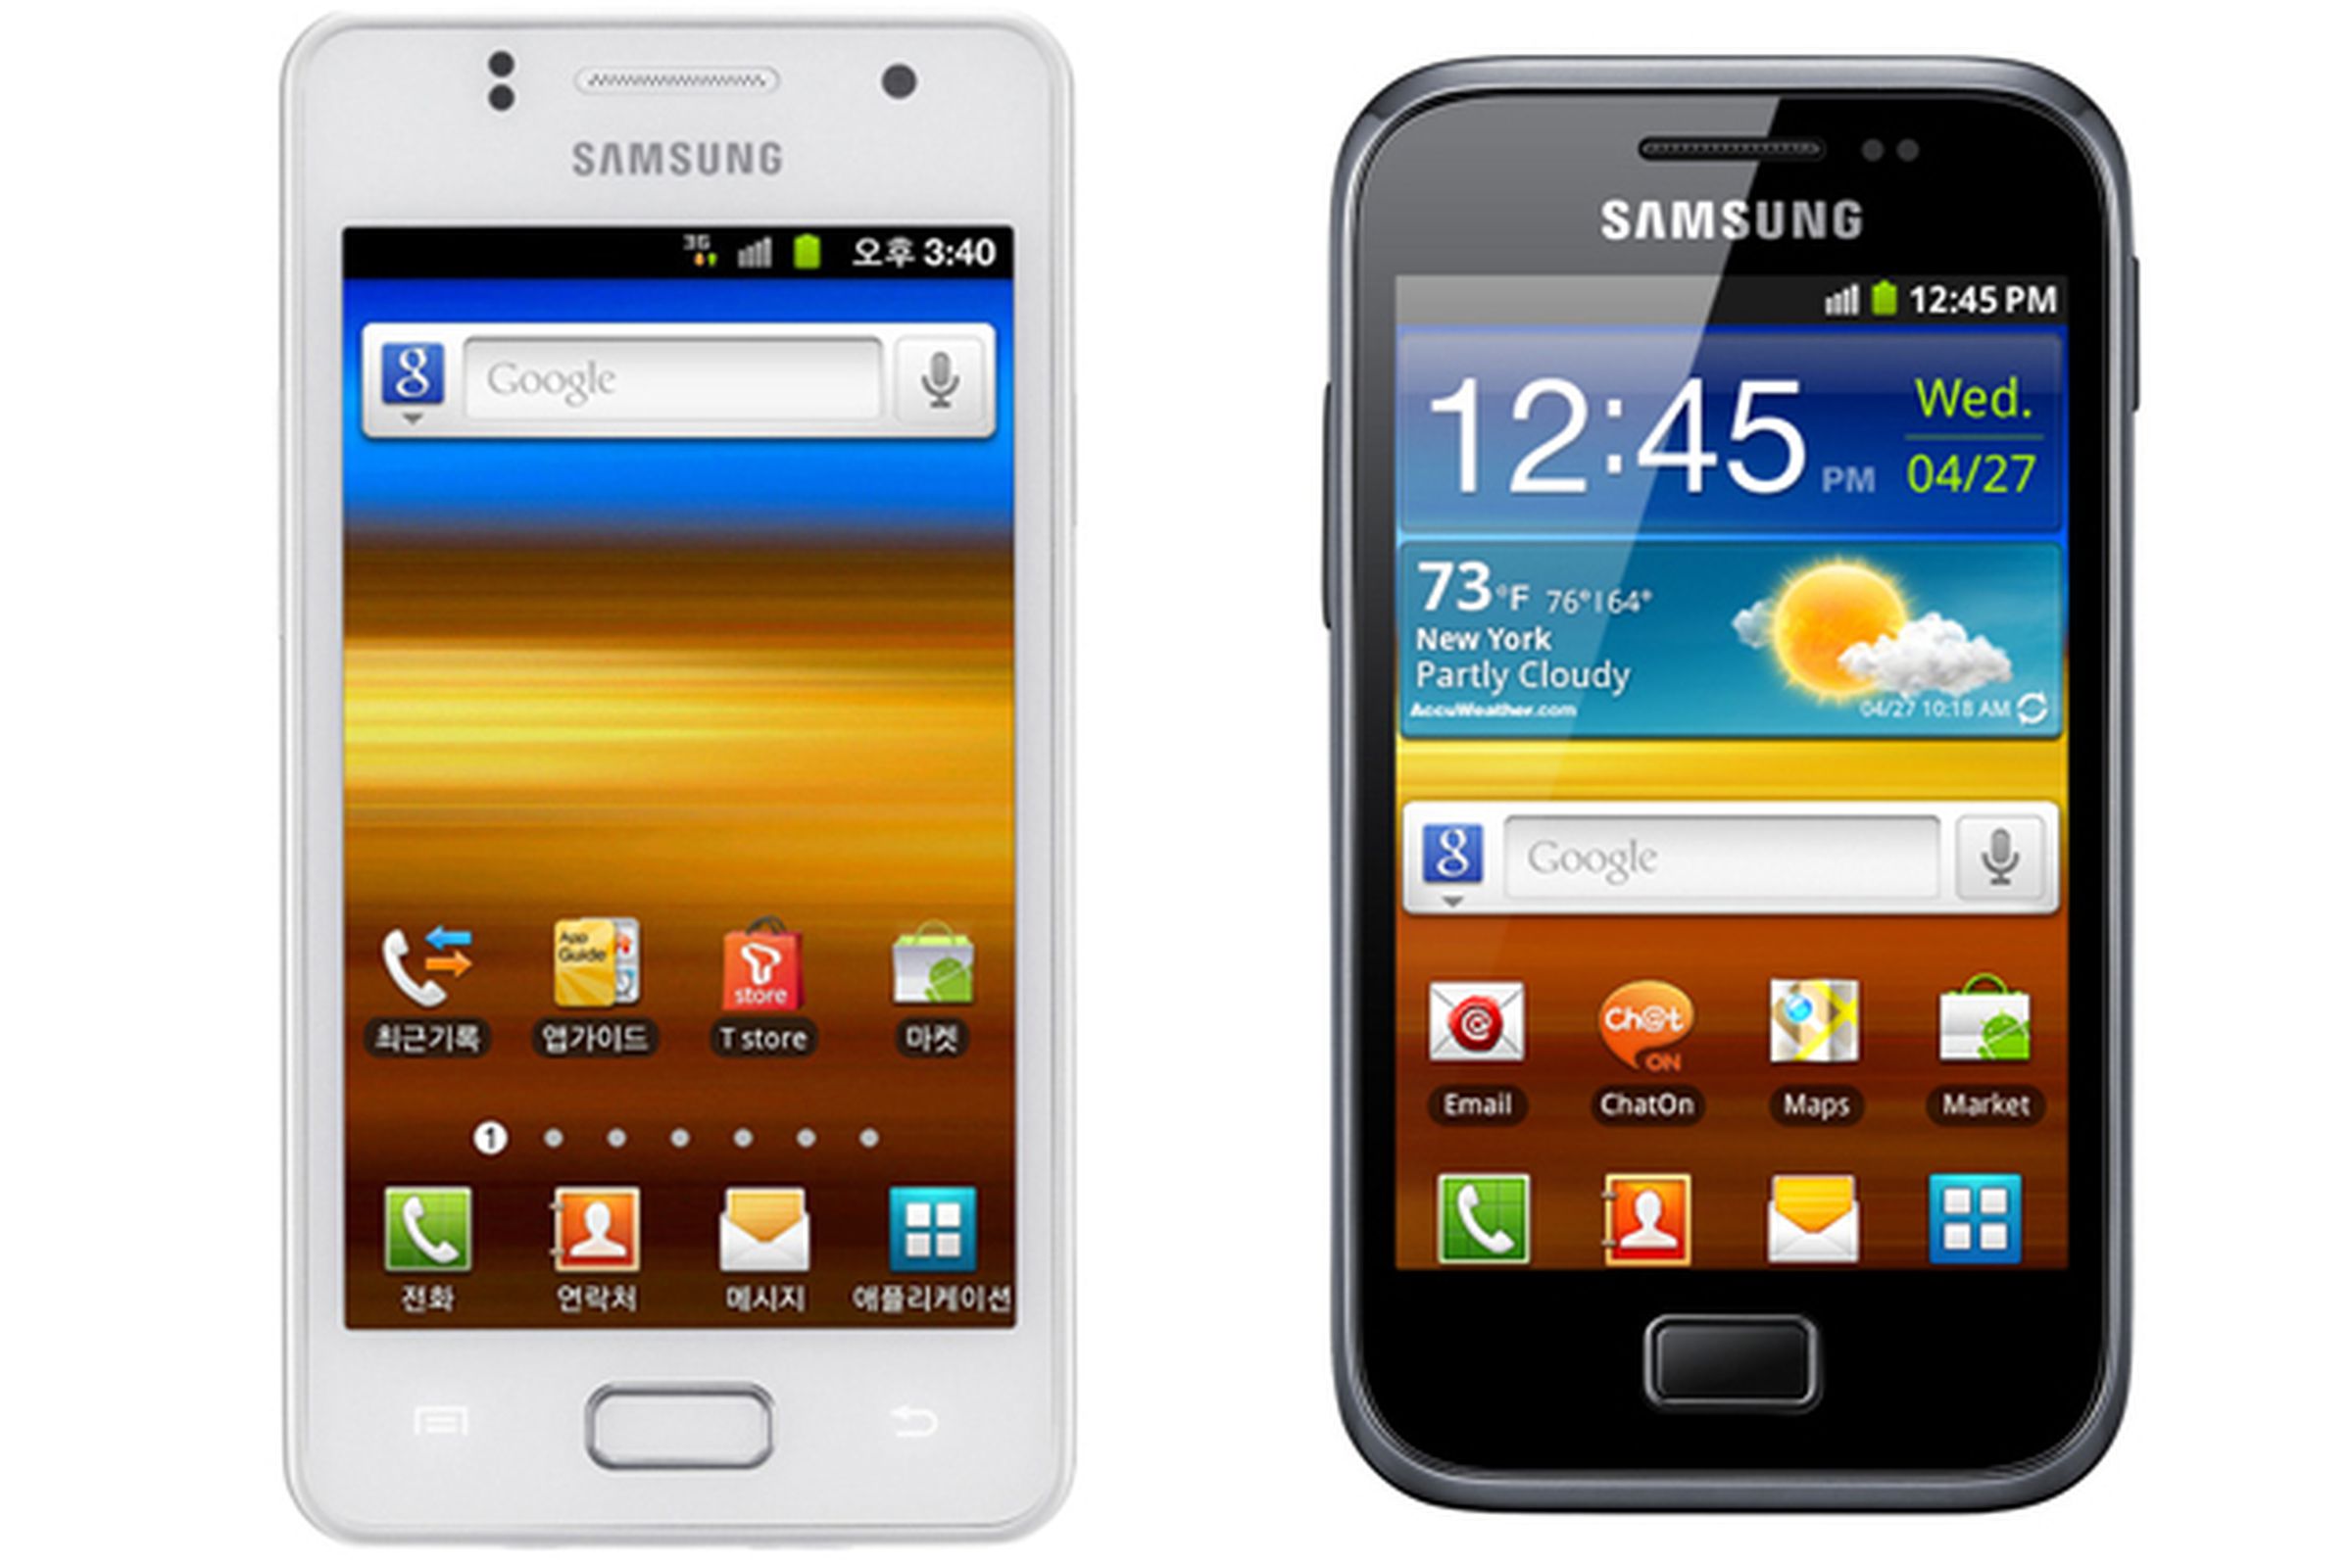 Samsung Galaxy Ace Plus and Galaxy M Style